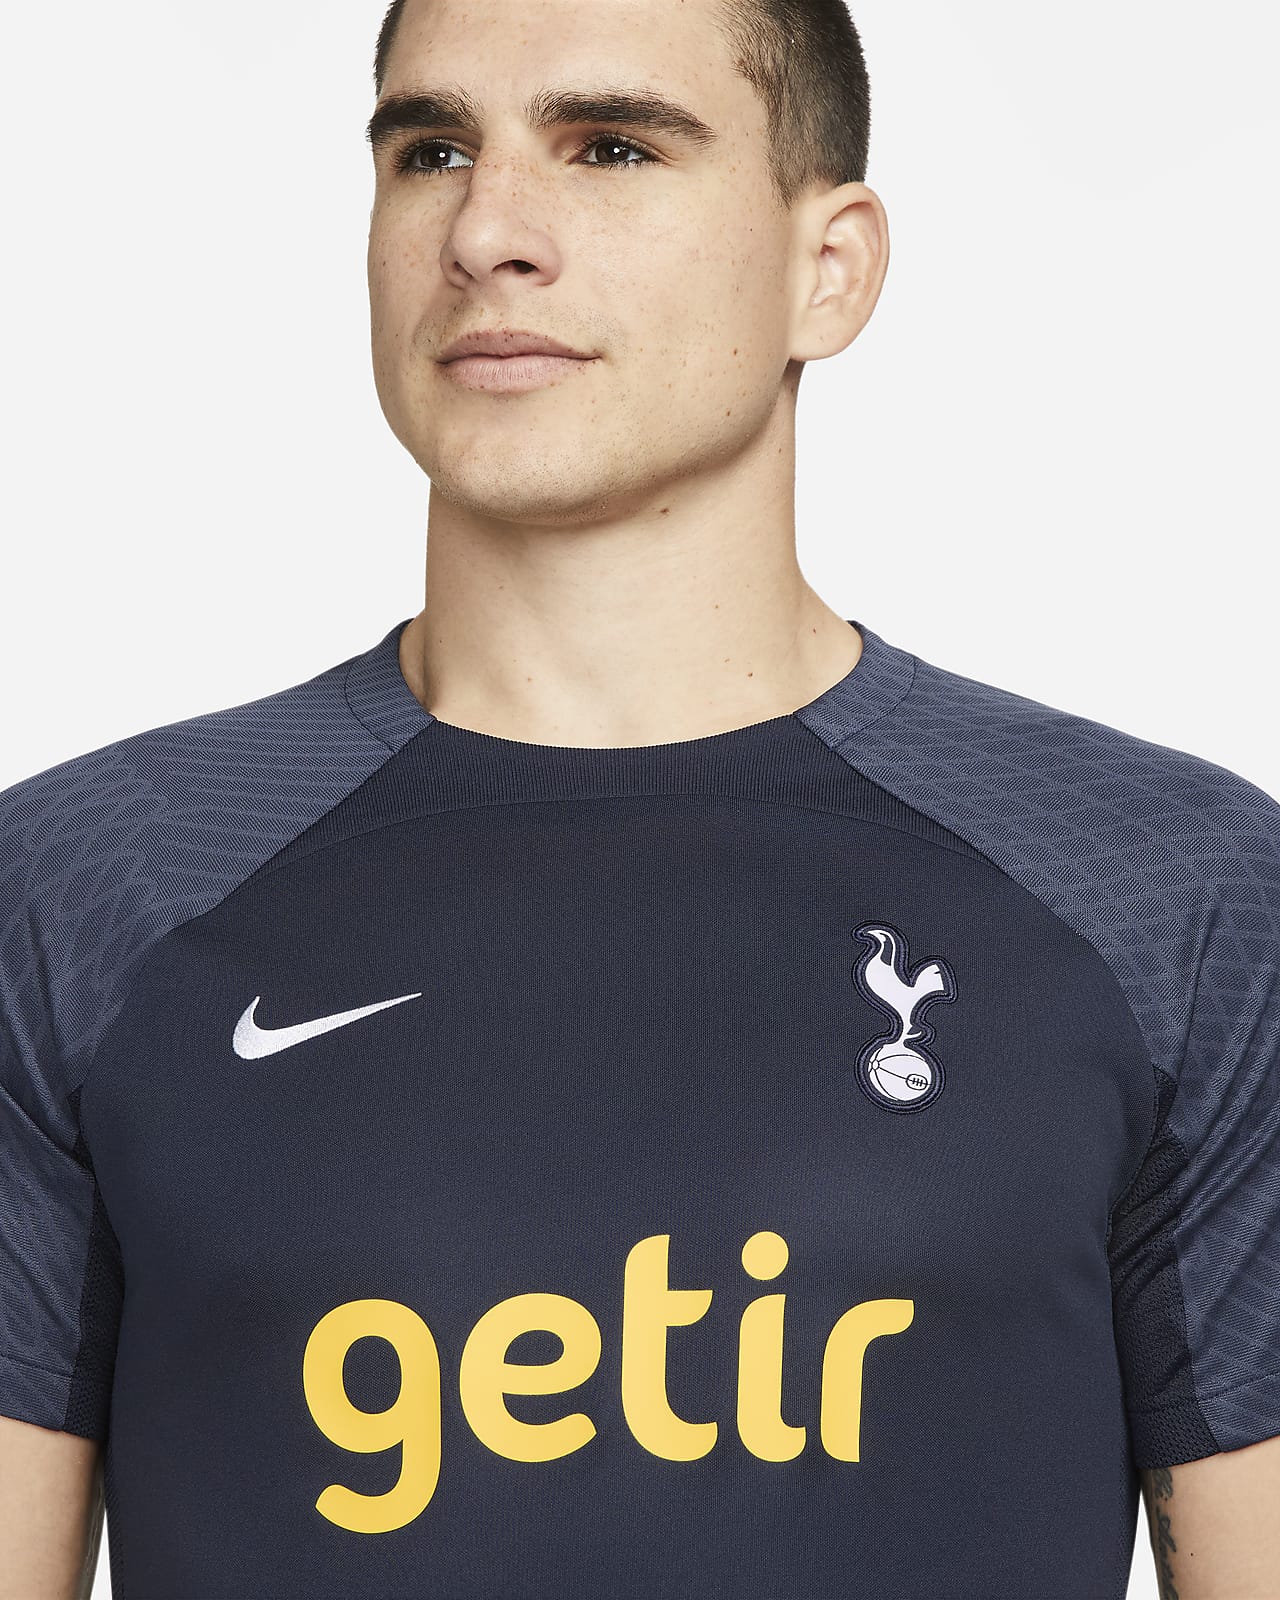 Tottenham Hotspur 2018/19 Nike Third Kit - FOOTBALL FASHION